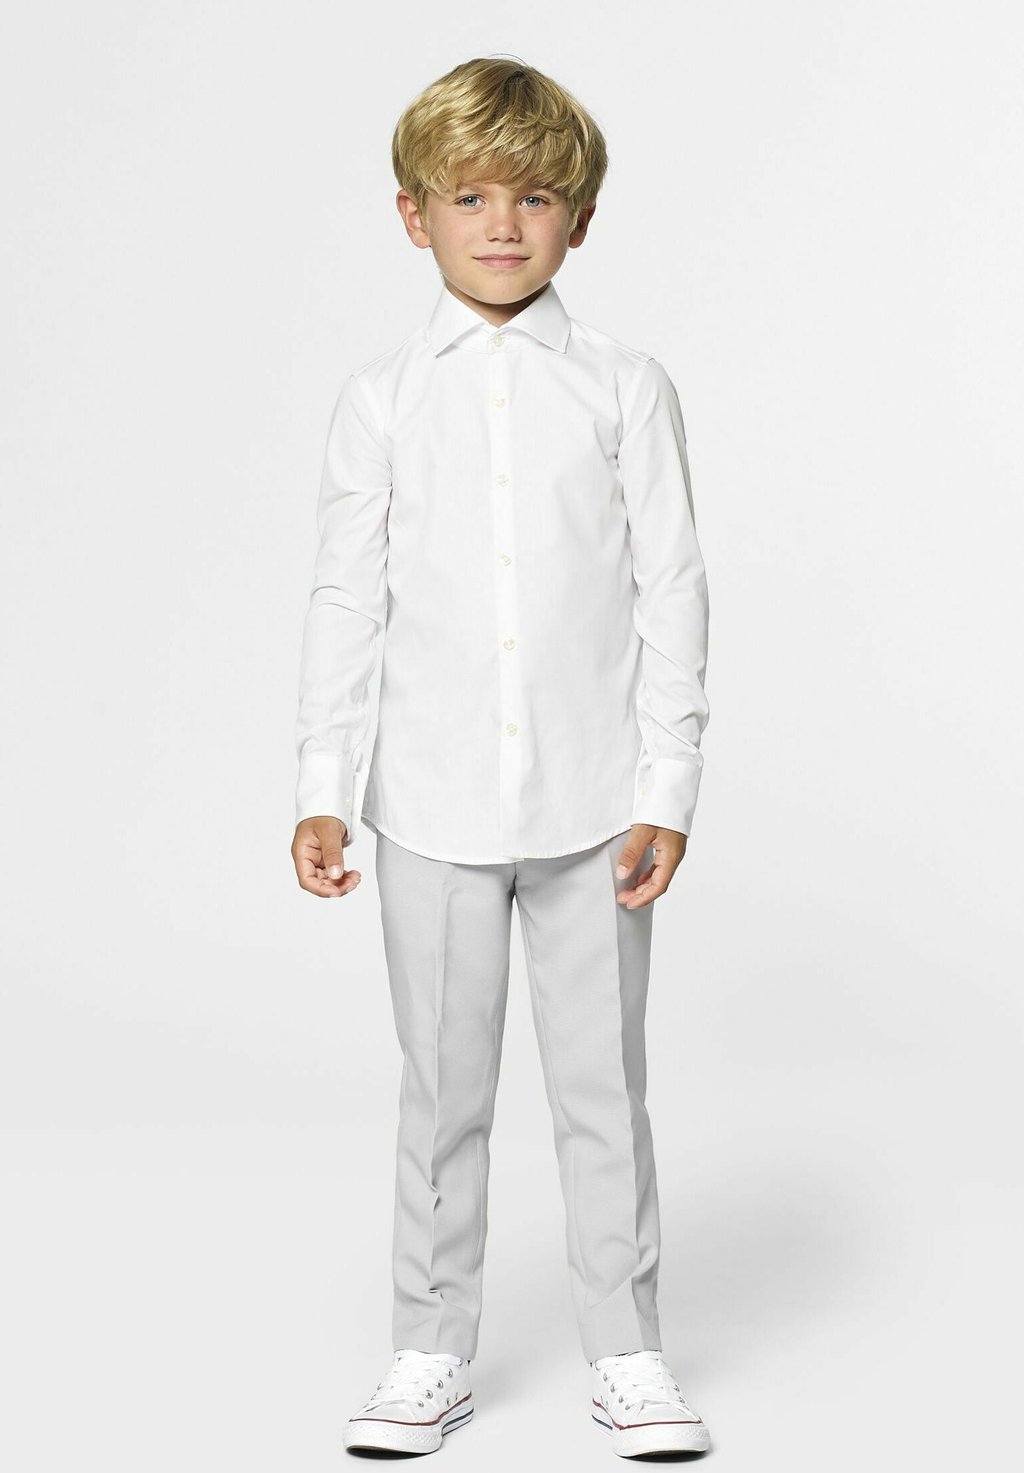 классическая рубашка solid color opposuits цвет white knight Рубашка KNIGHT OppoSuits, цвет white